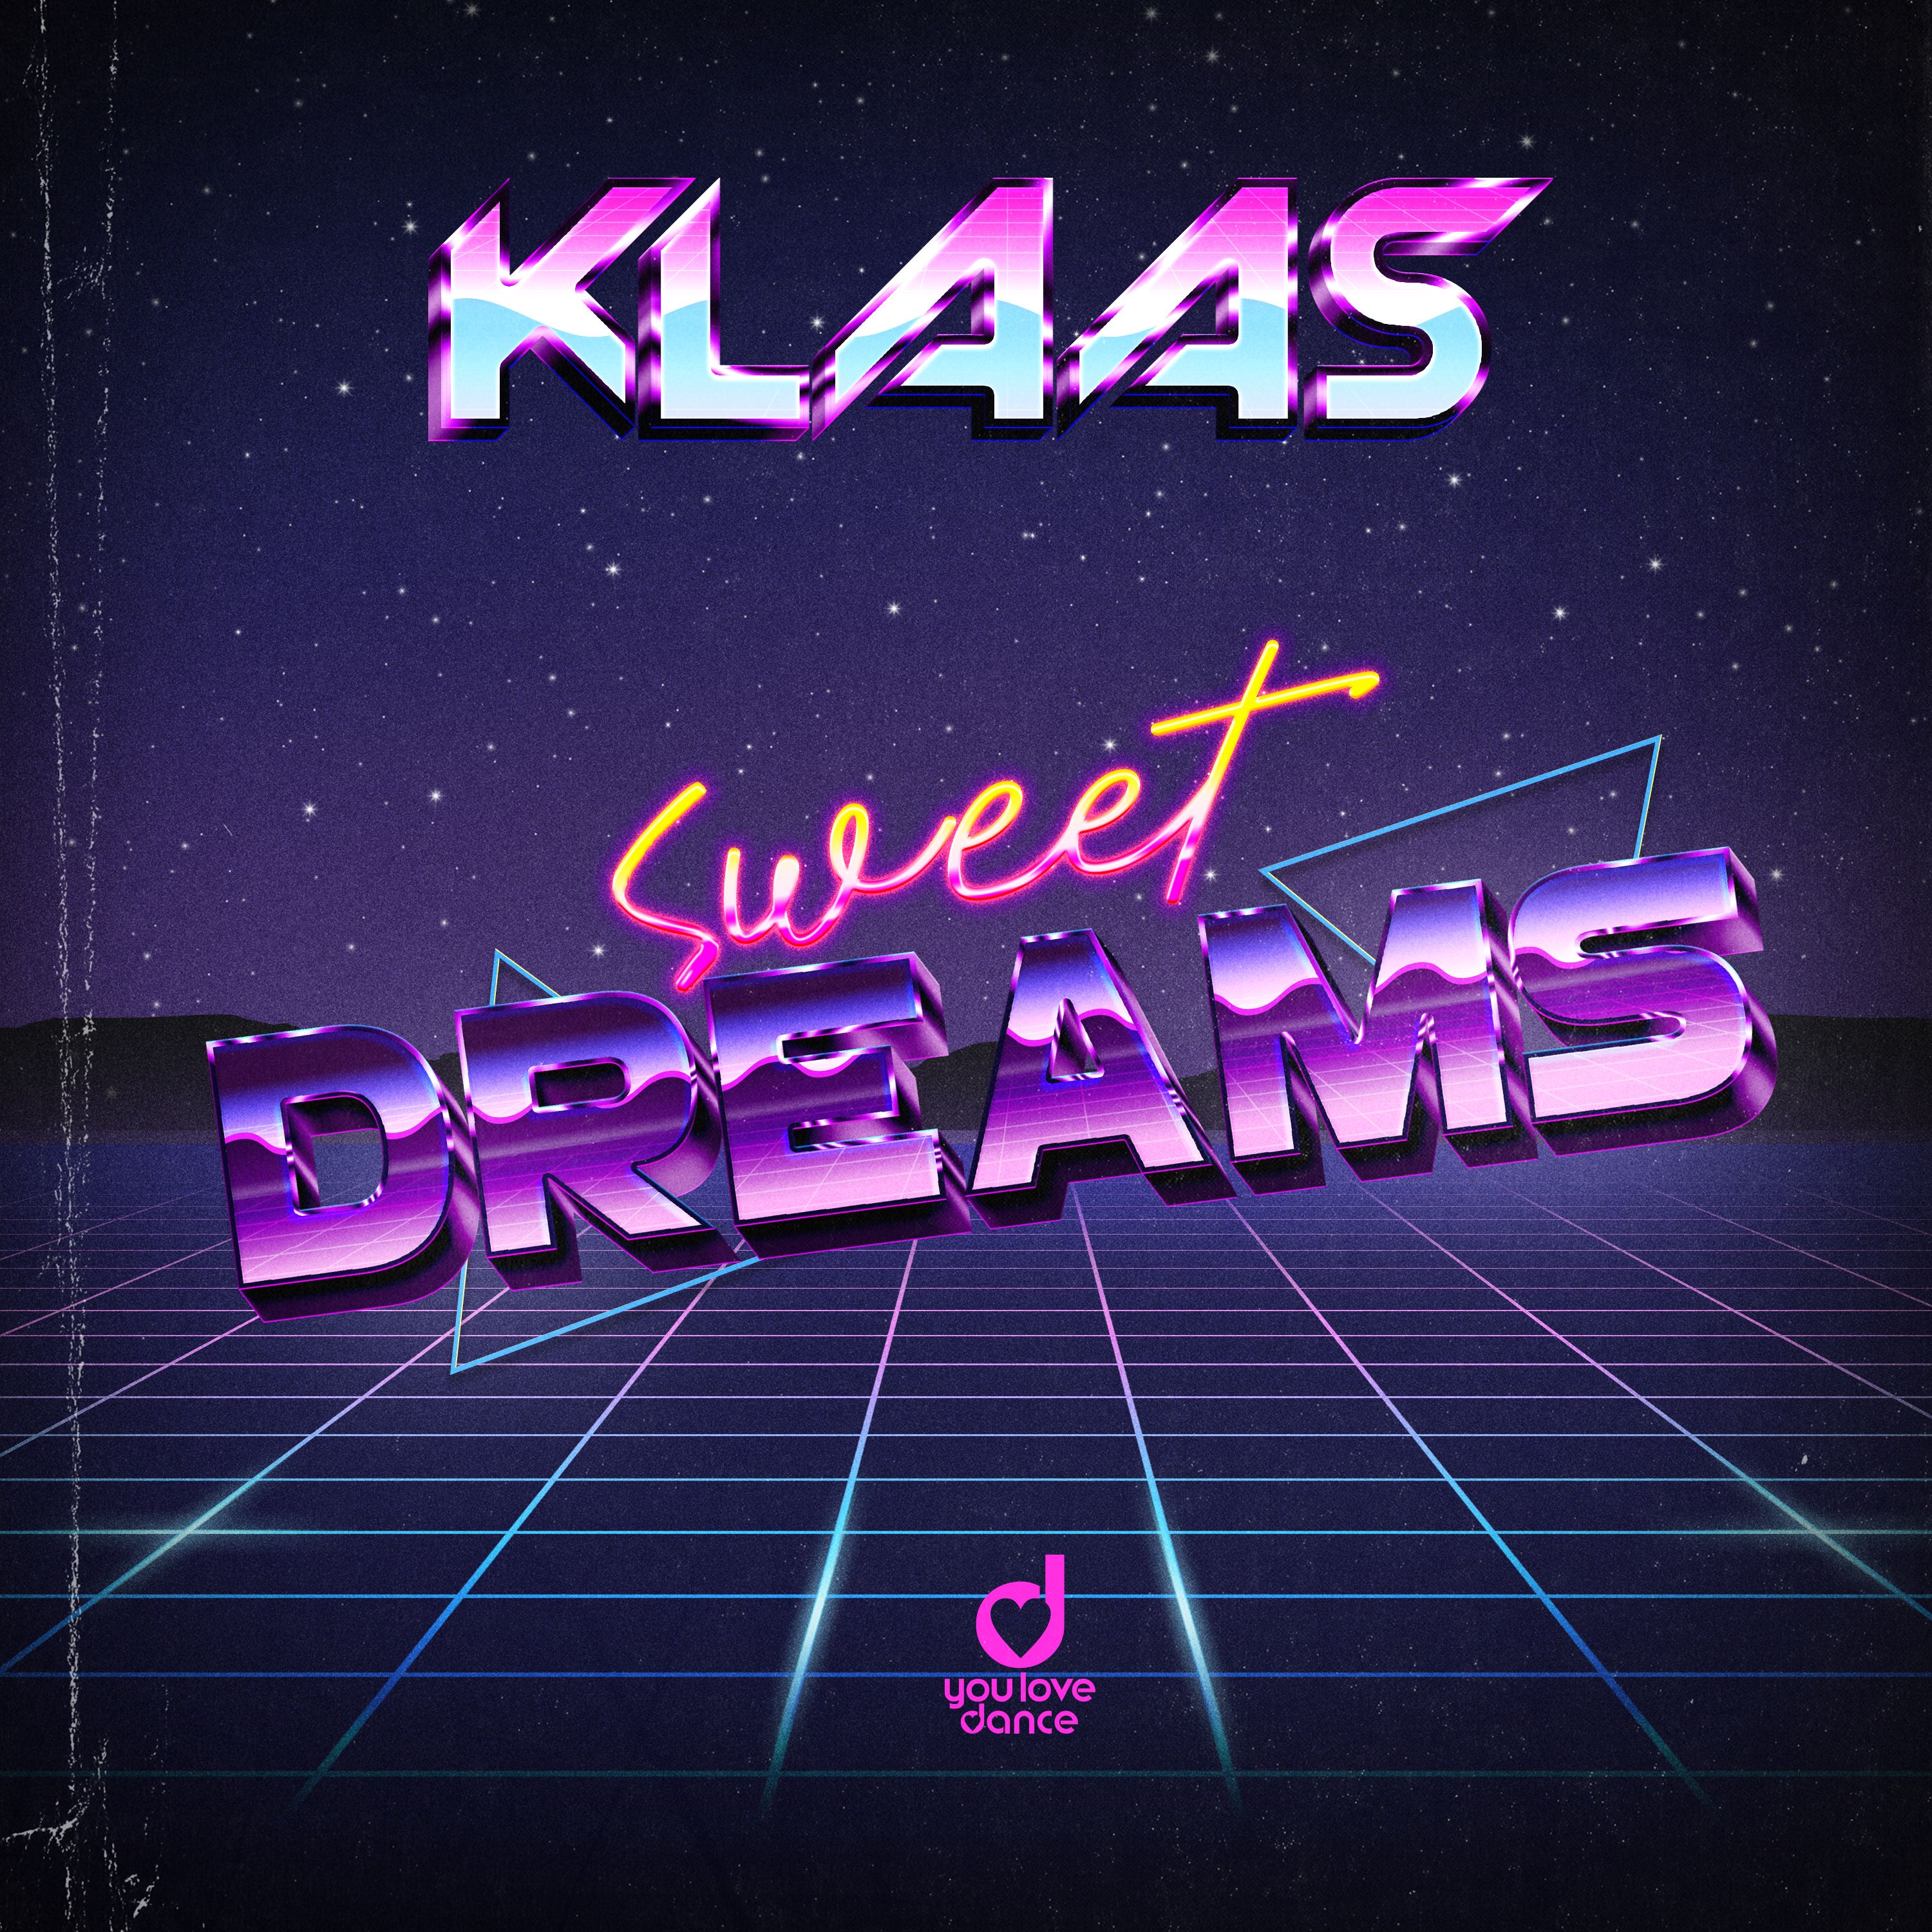 Ṣe igbasilẹ Klaas - Sweet Dreams